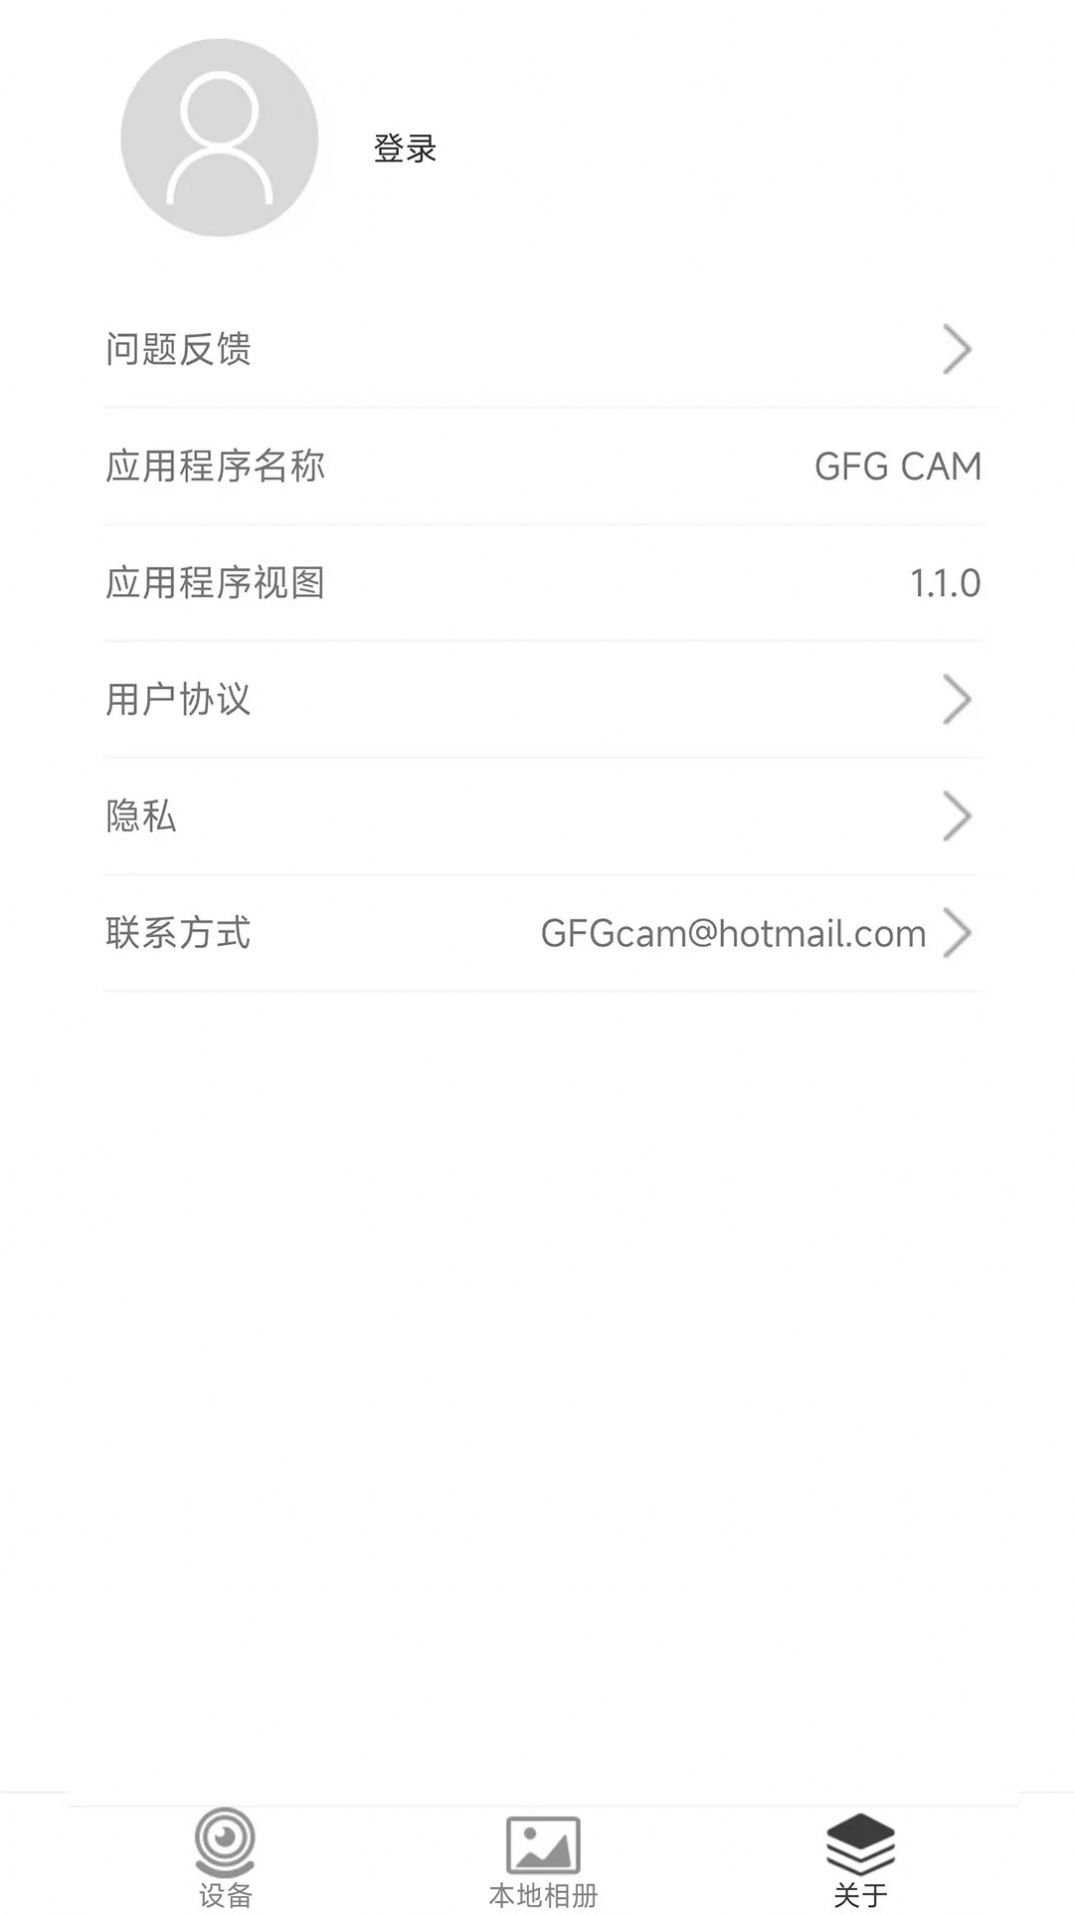 GFG CAM行车记录仪软件最新版图1: